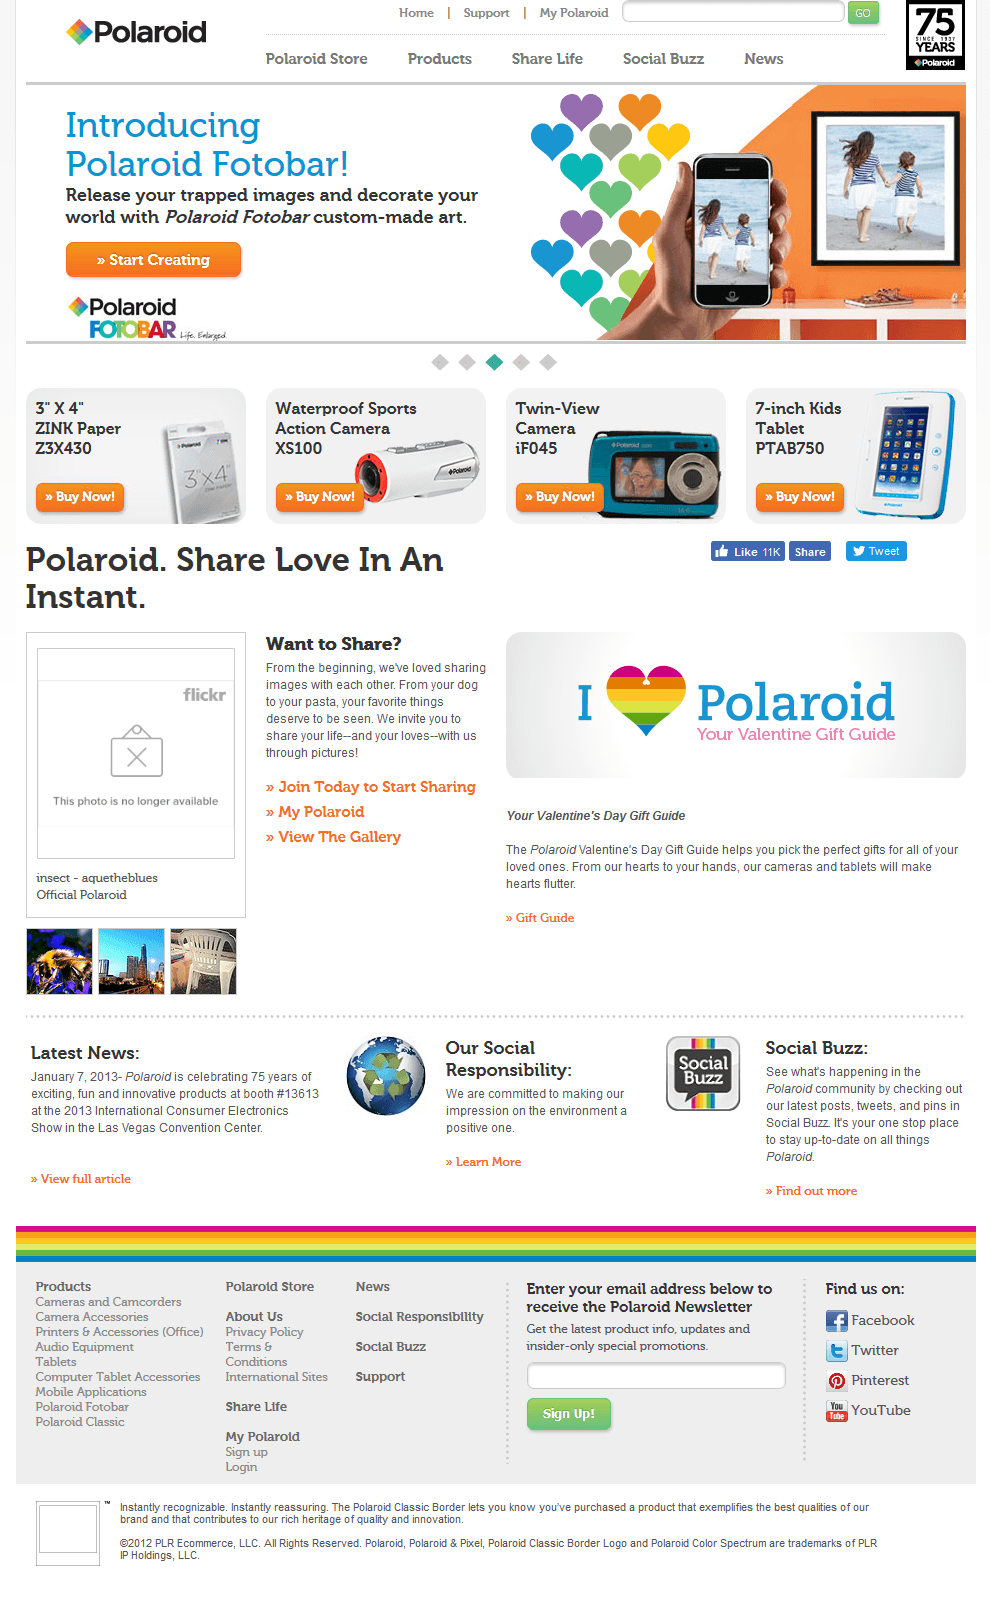 Polaroid website in 2013